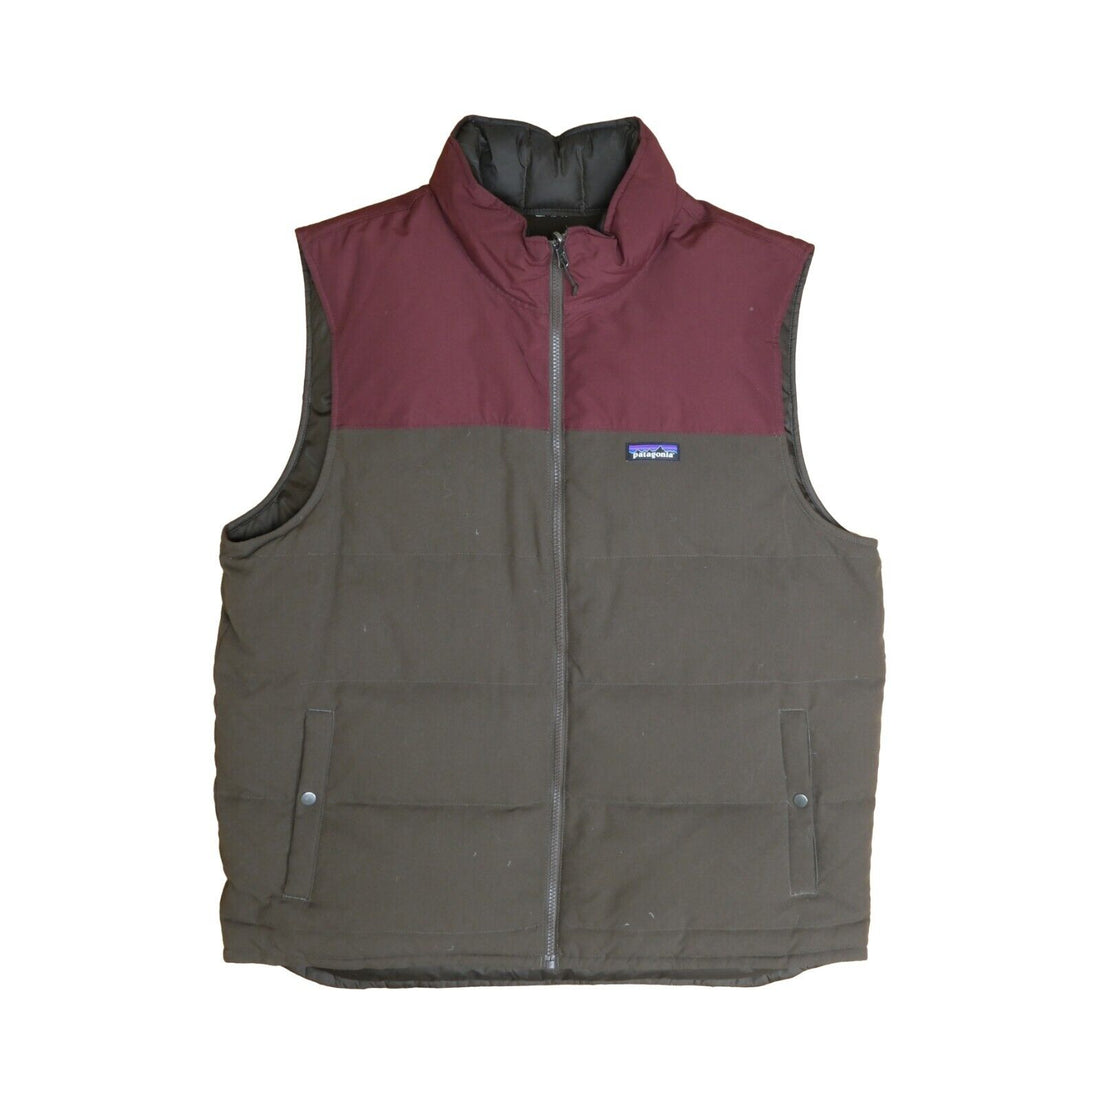 Patagonia Insulated Jacket Size Large